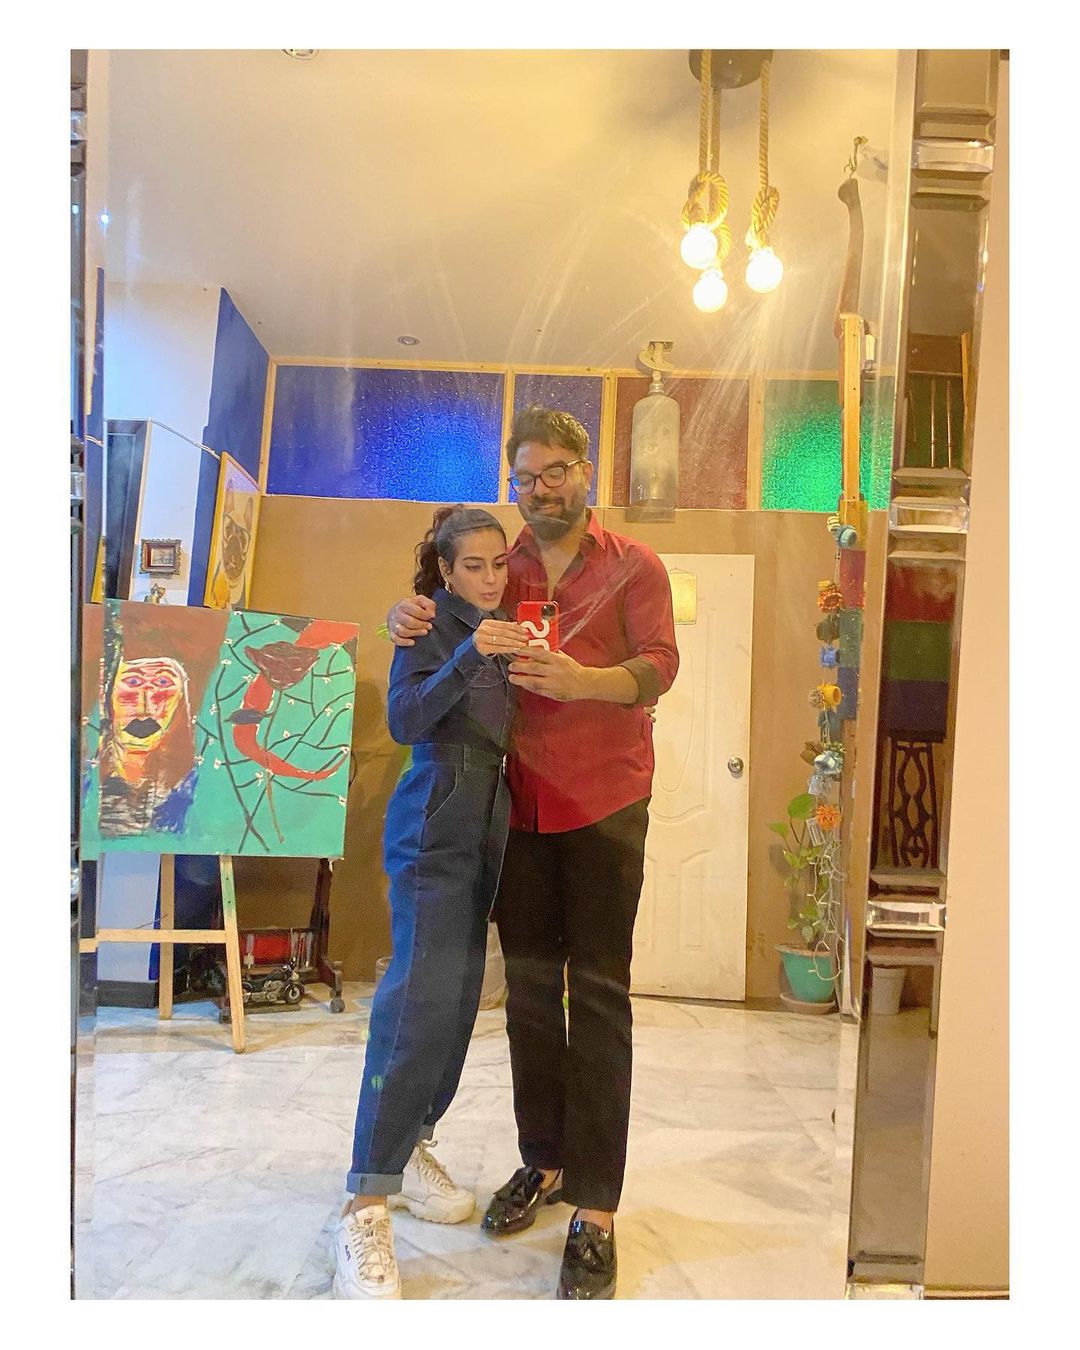 Iqra Aziz and Yasir Hussain Clicks from Birthday Dinner Date